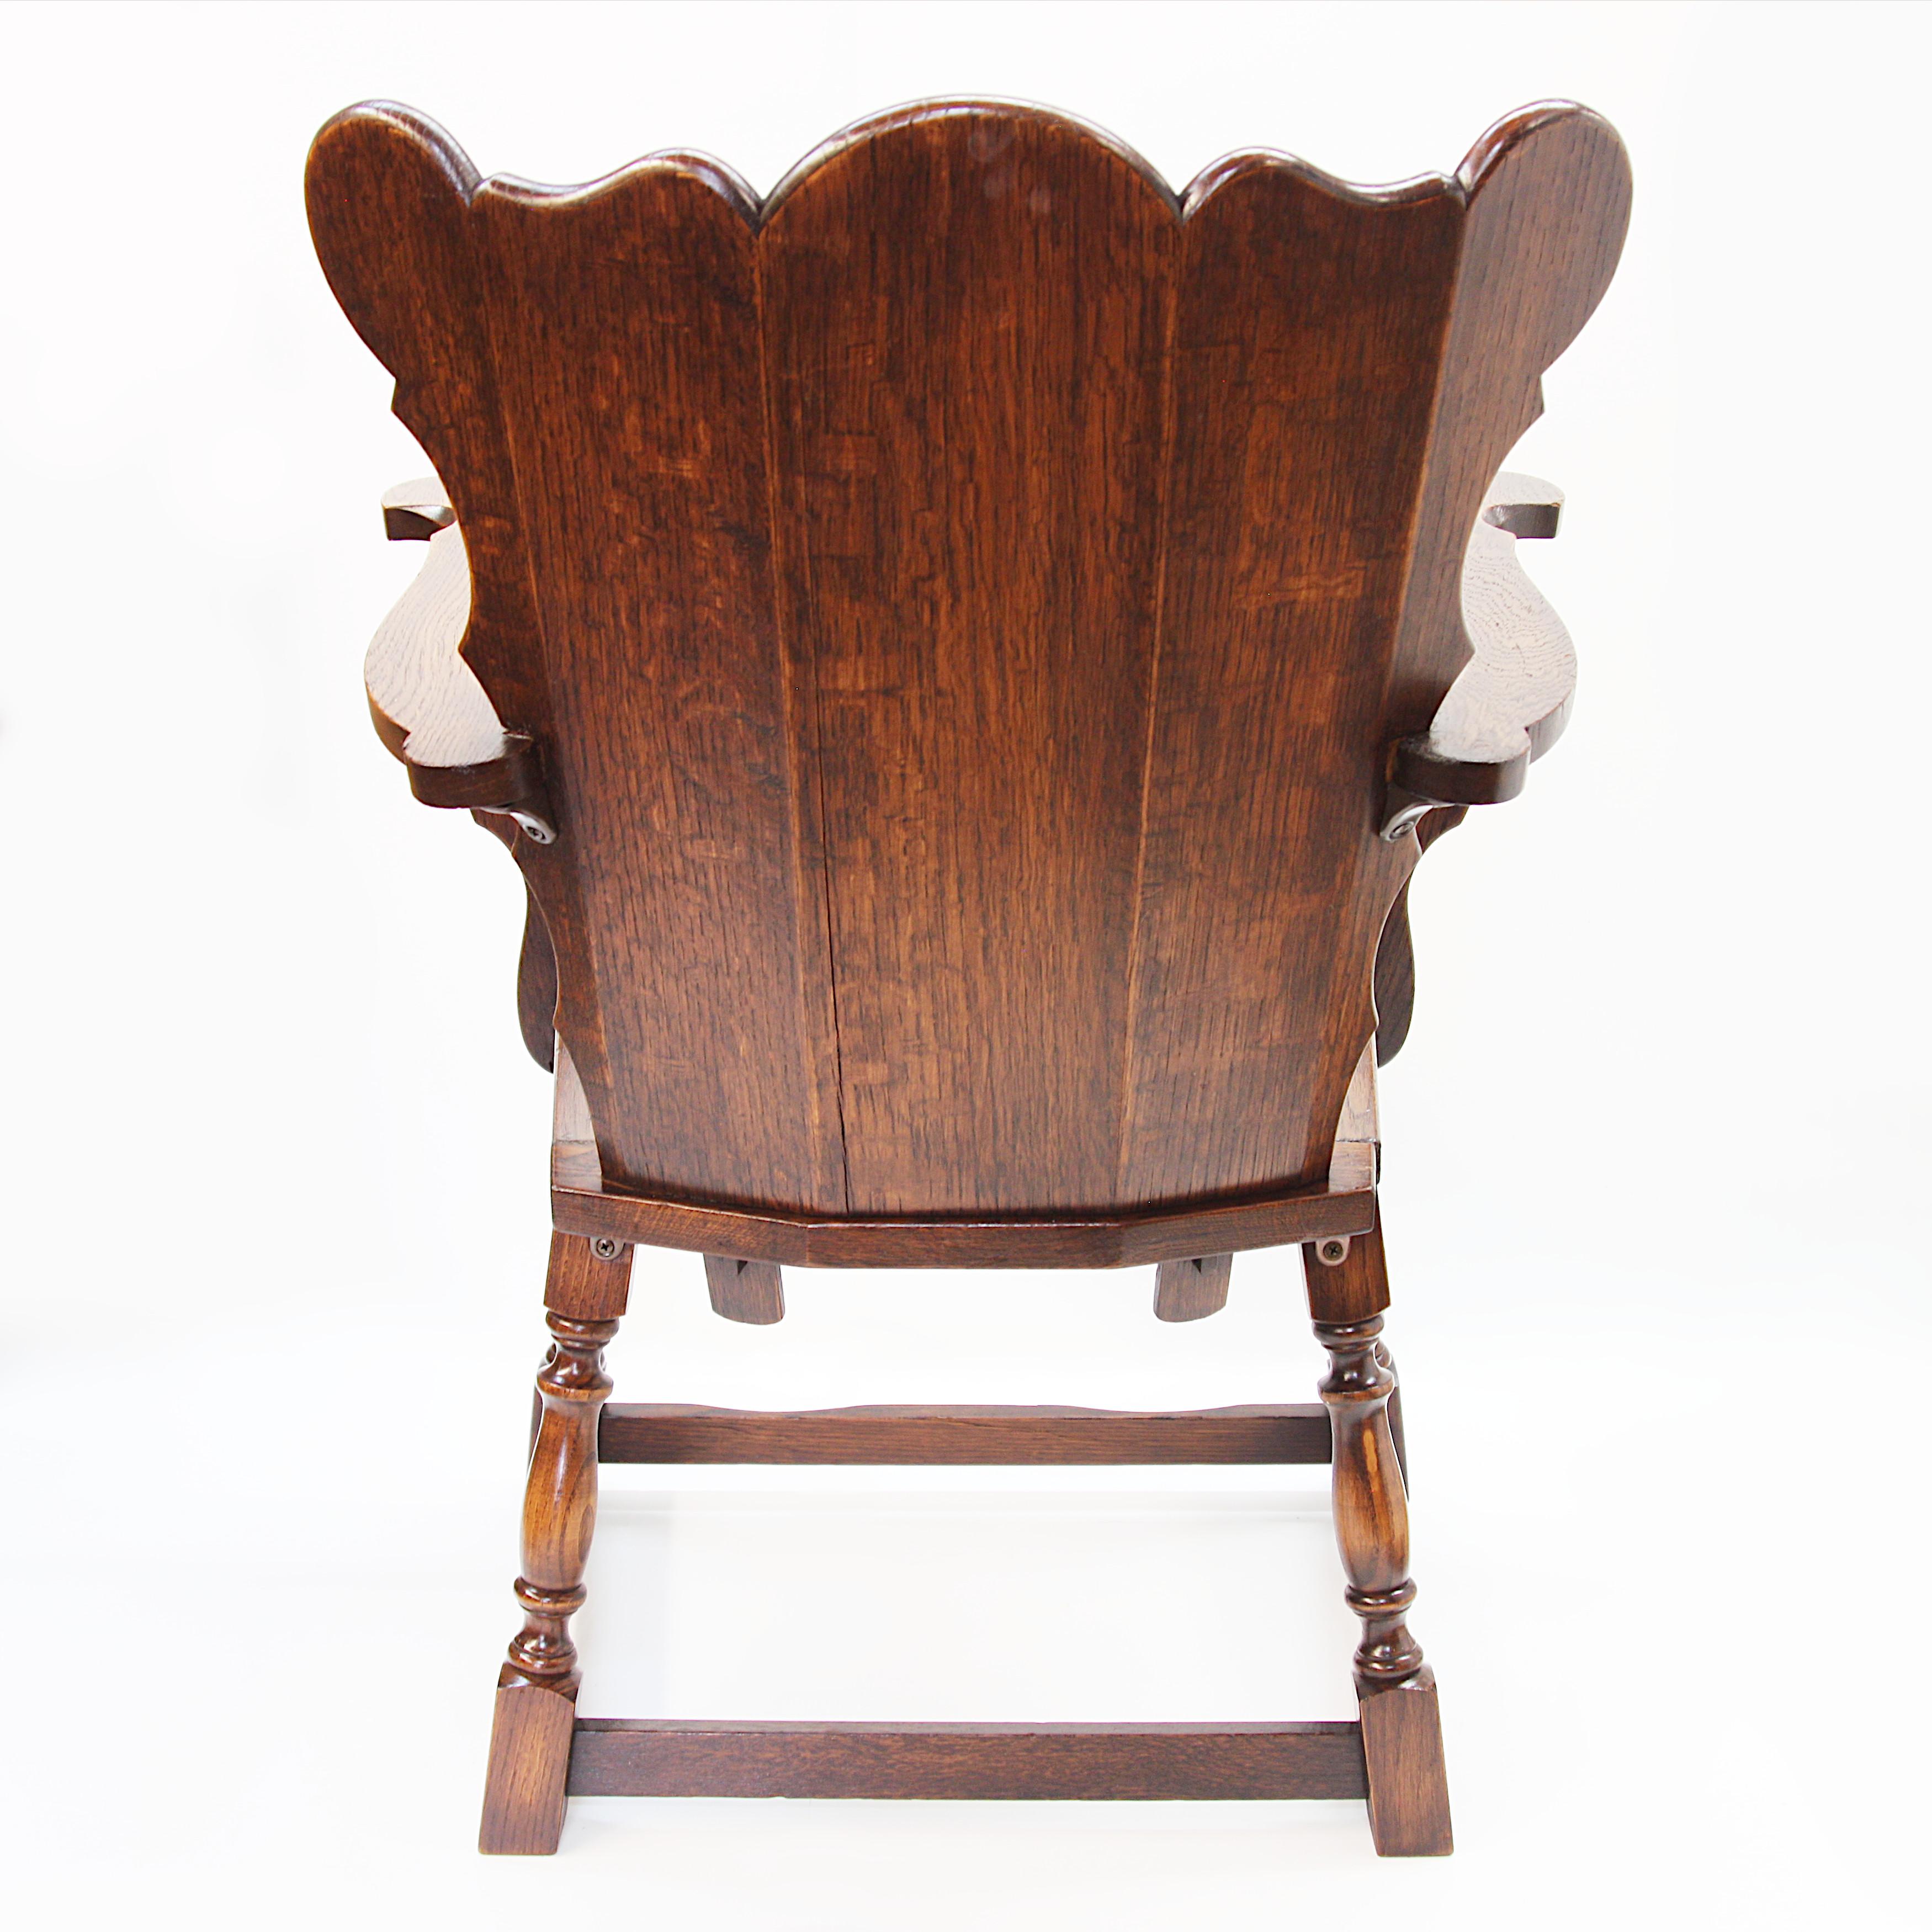 Carved Vintage Dutch Medieval Revival Heraldic Coat of Arms Oak Lodge Arm Chair